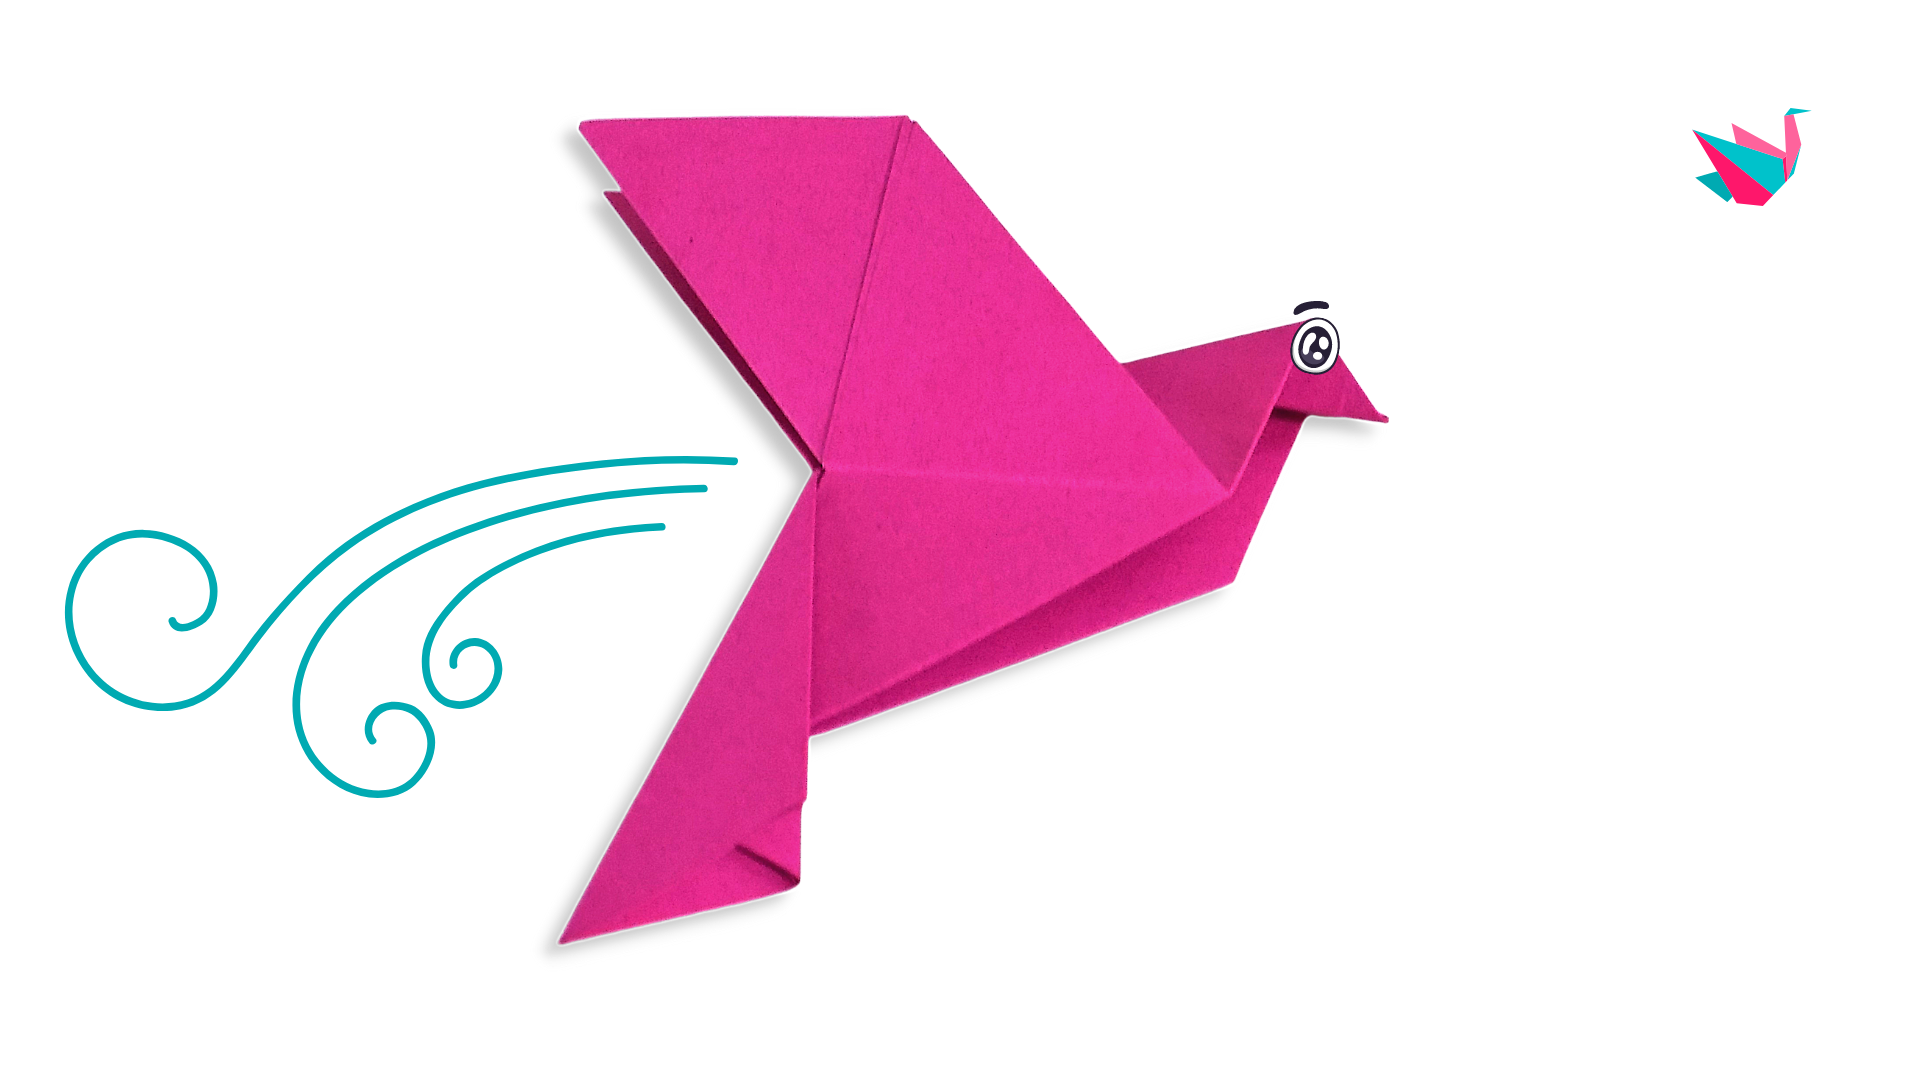 Origami colombe - Colombe en origami